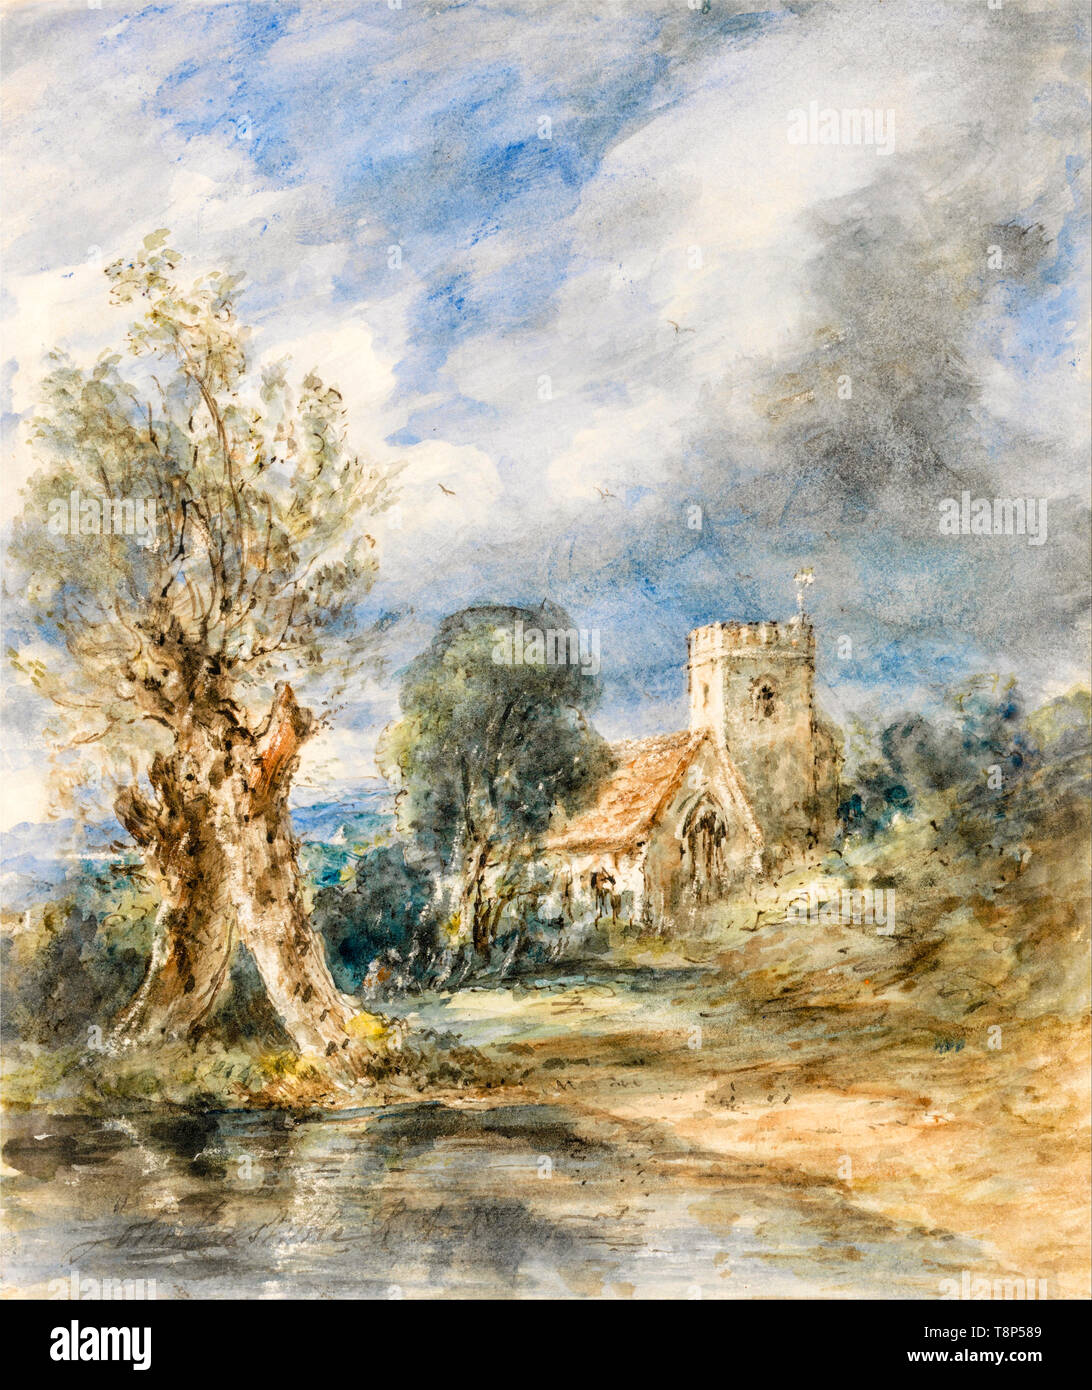 John Constable, Stoke Poges Church, de l'aquarelle, 1834 Banque D'Images